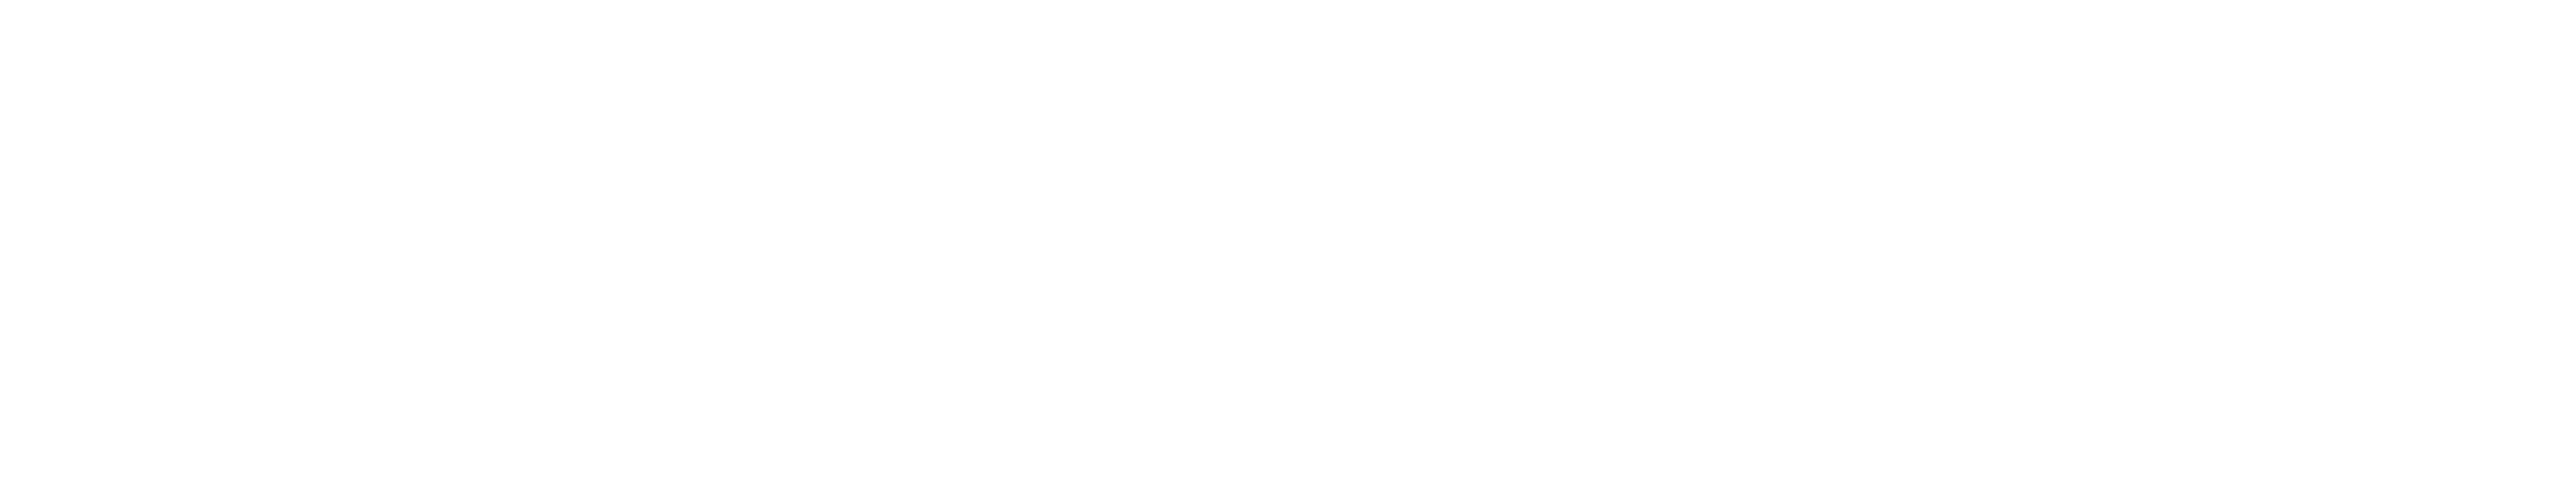 2560px-Husqvarna_logo.svg